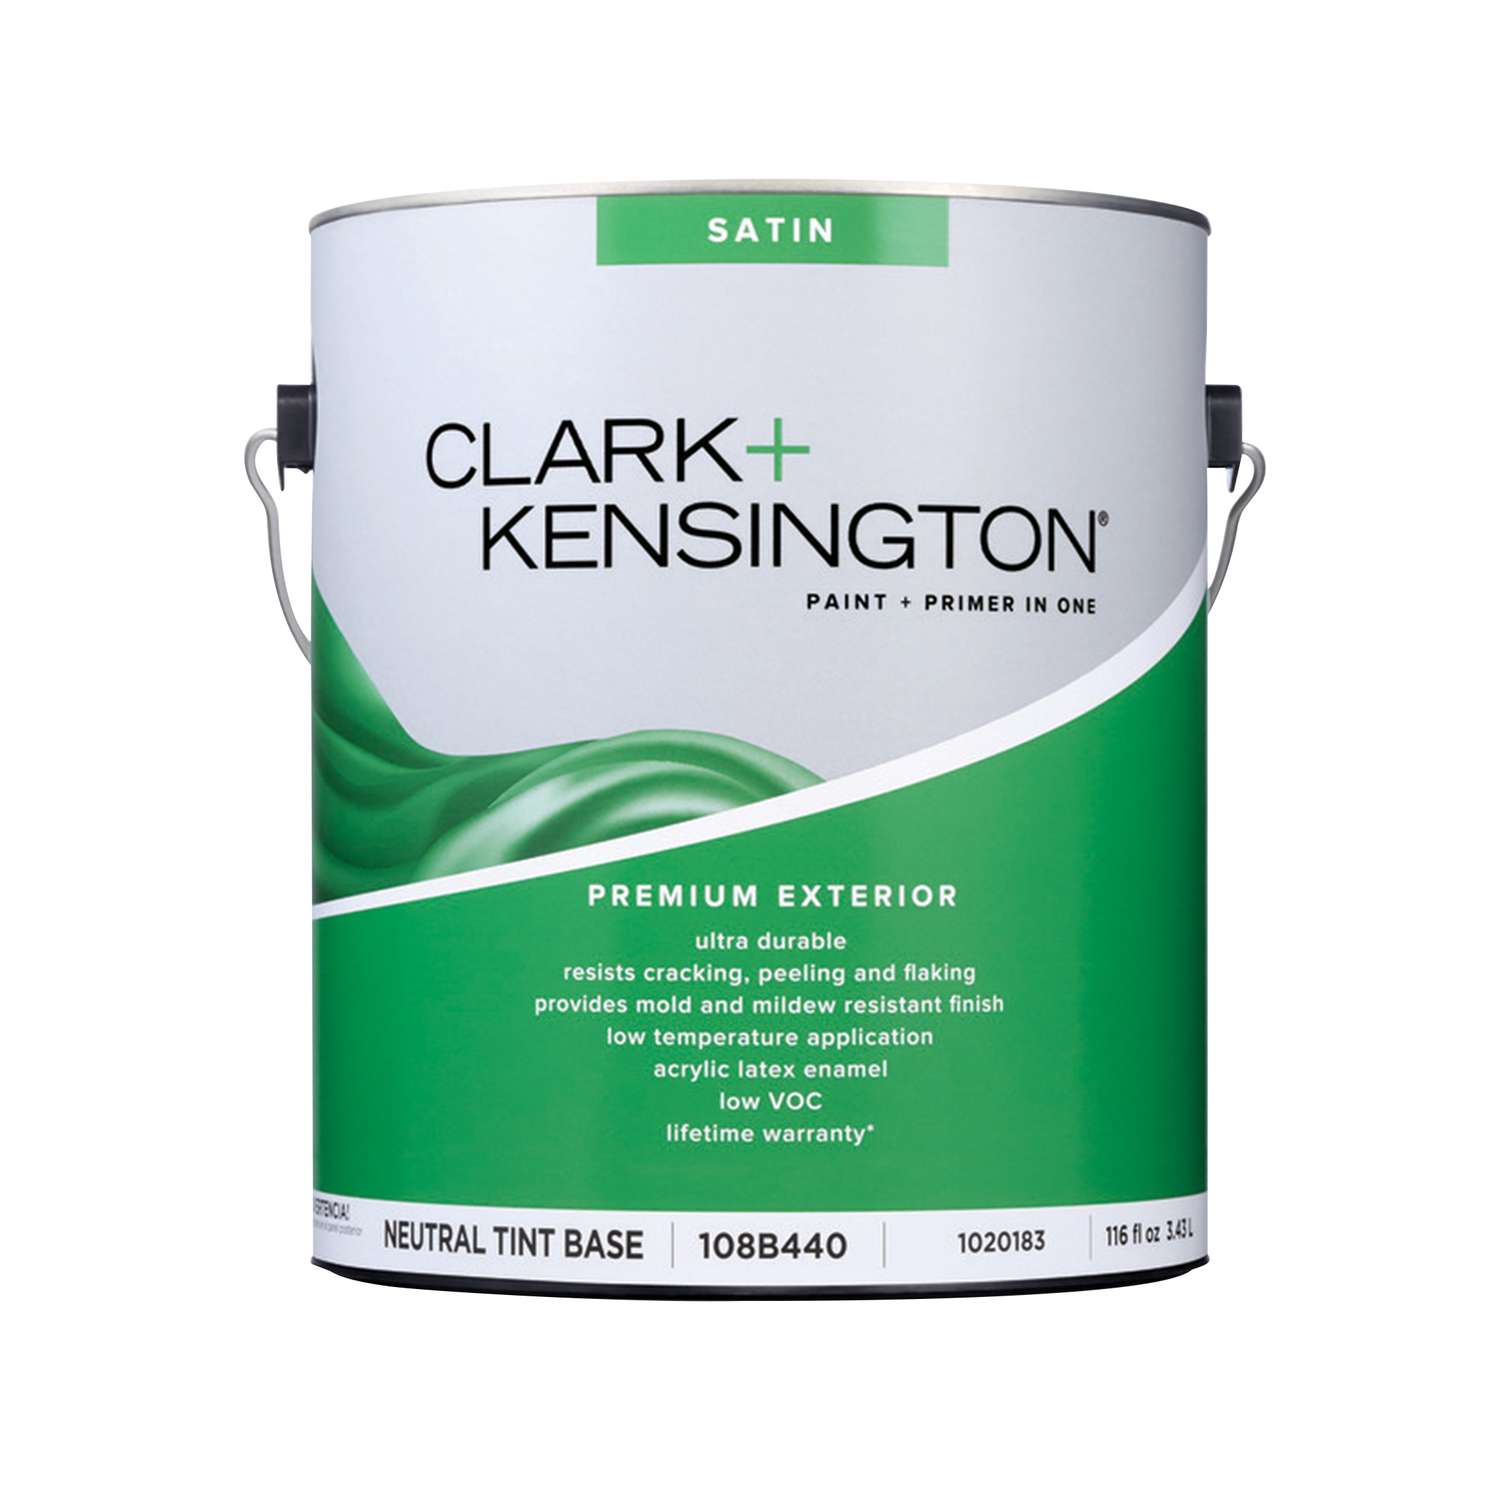 Clark+Kensington Satin Tint Base Neutral Base Premium